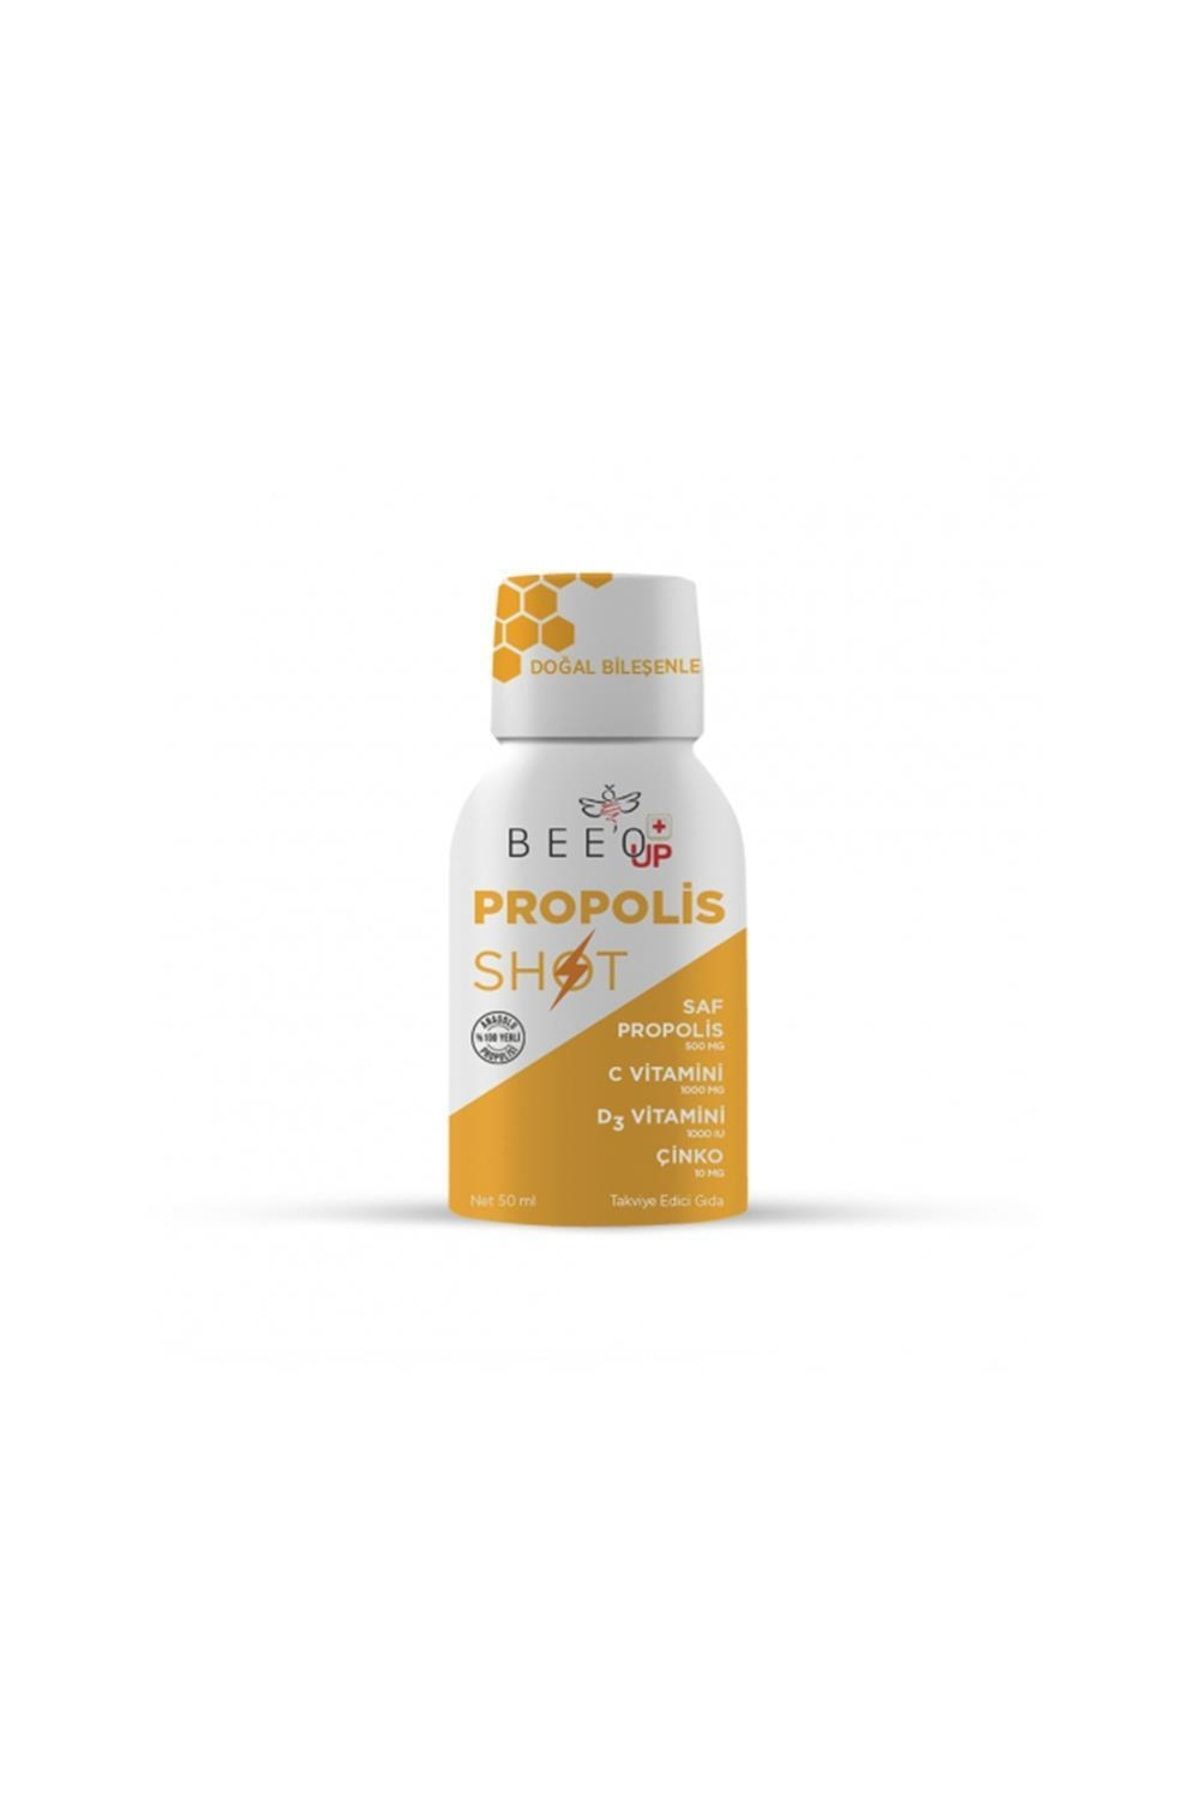 Beeo Propolis Çinko +d3 +c Vitamini Shot 50 Ml